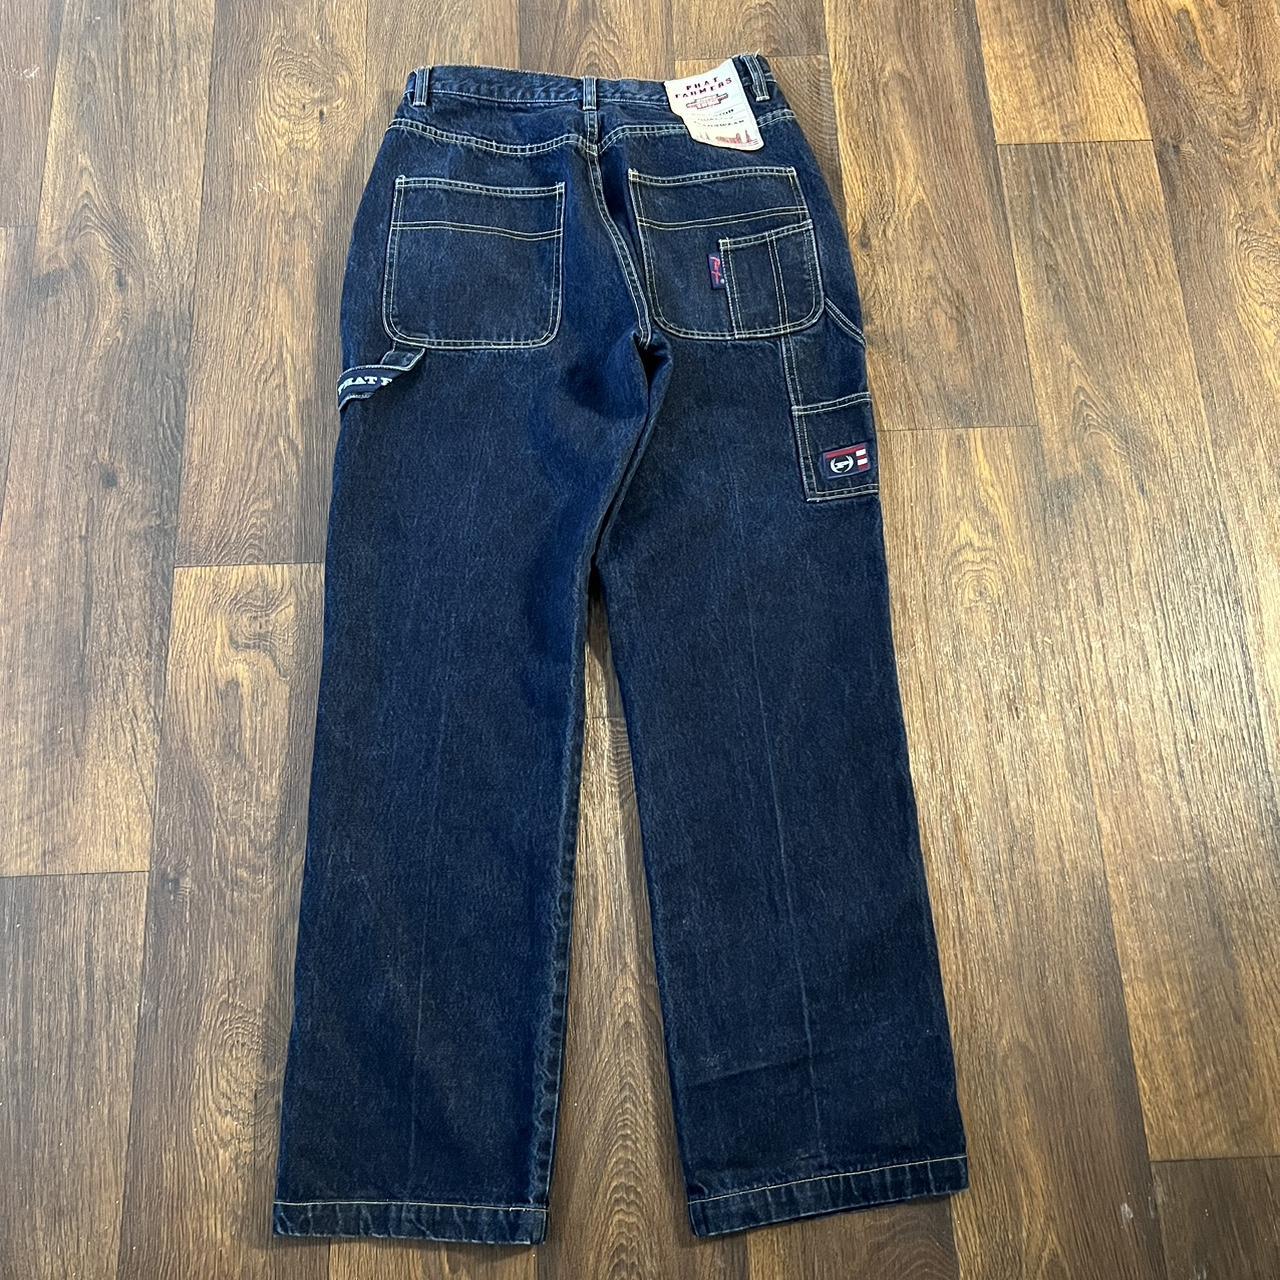 Phat farm carpenter jeans Waist 30 Inseam 34 - Depop